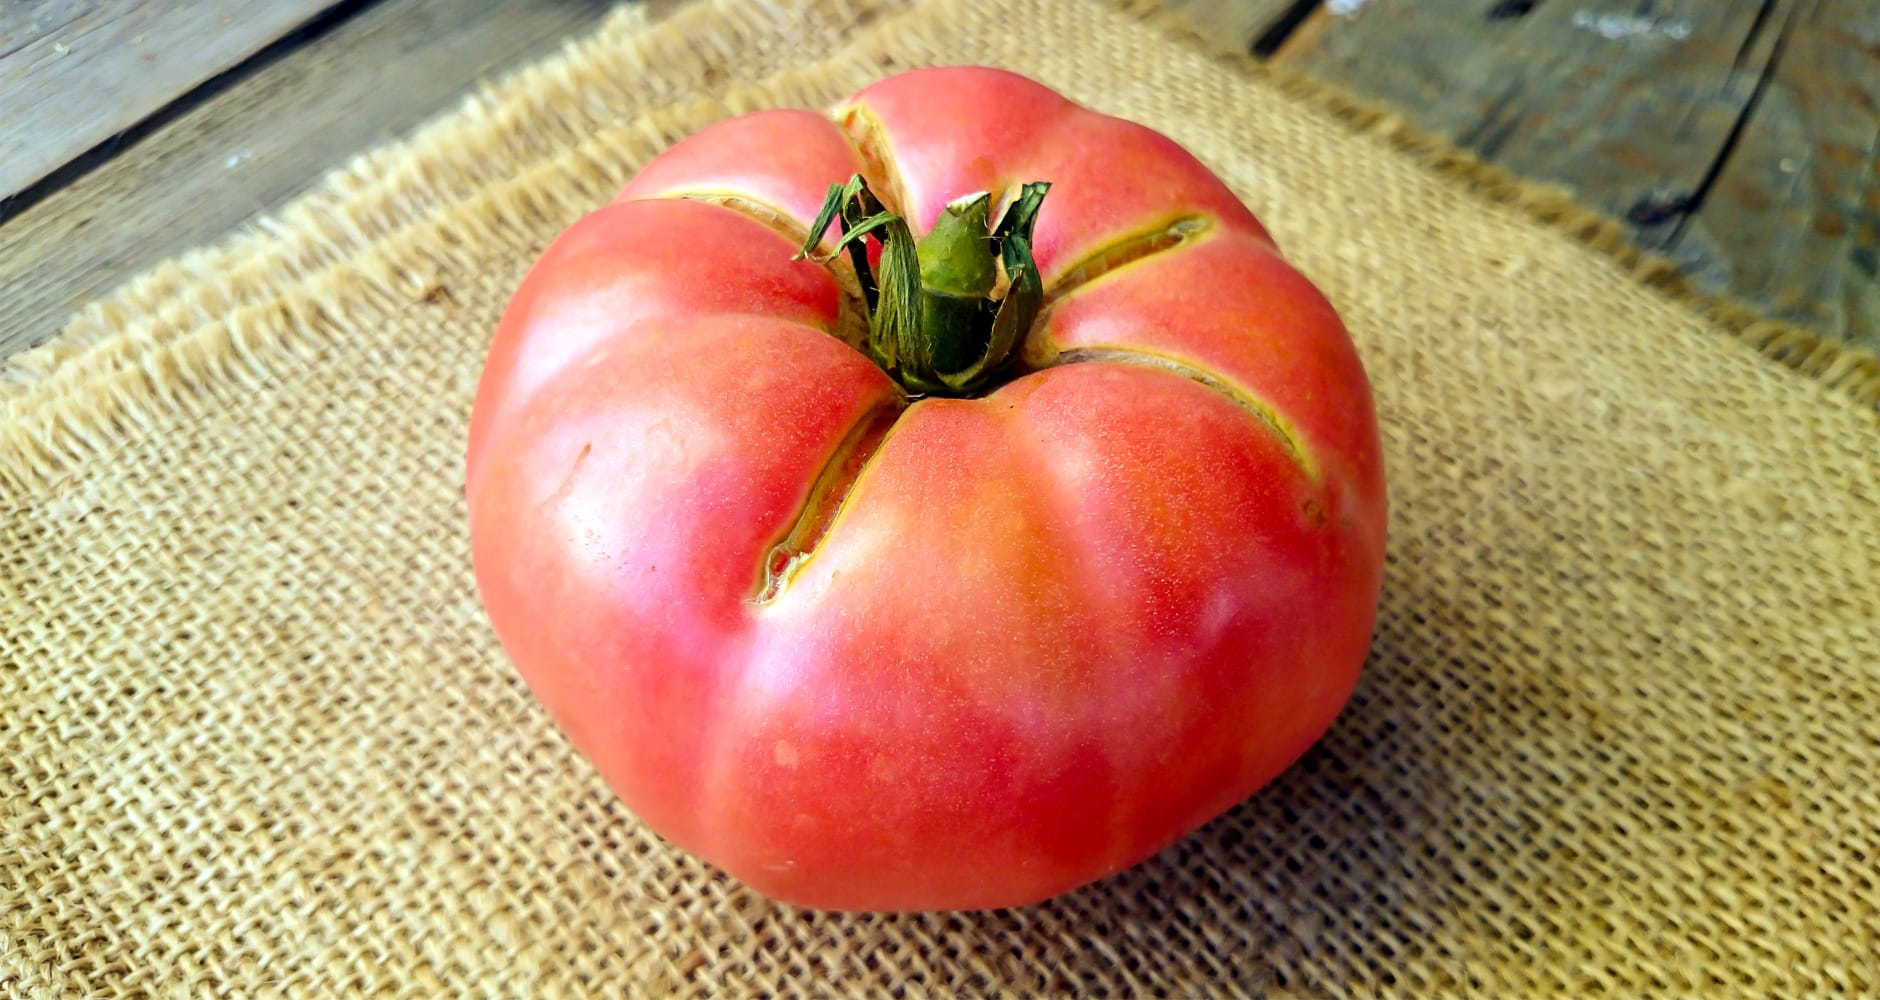 Fruit crack on a tomato.